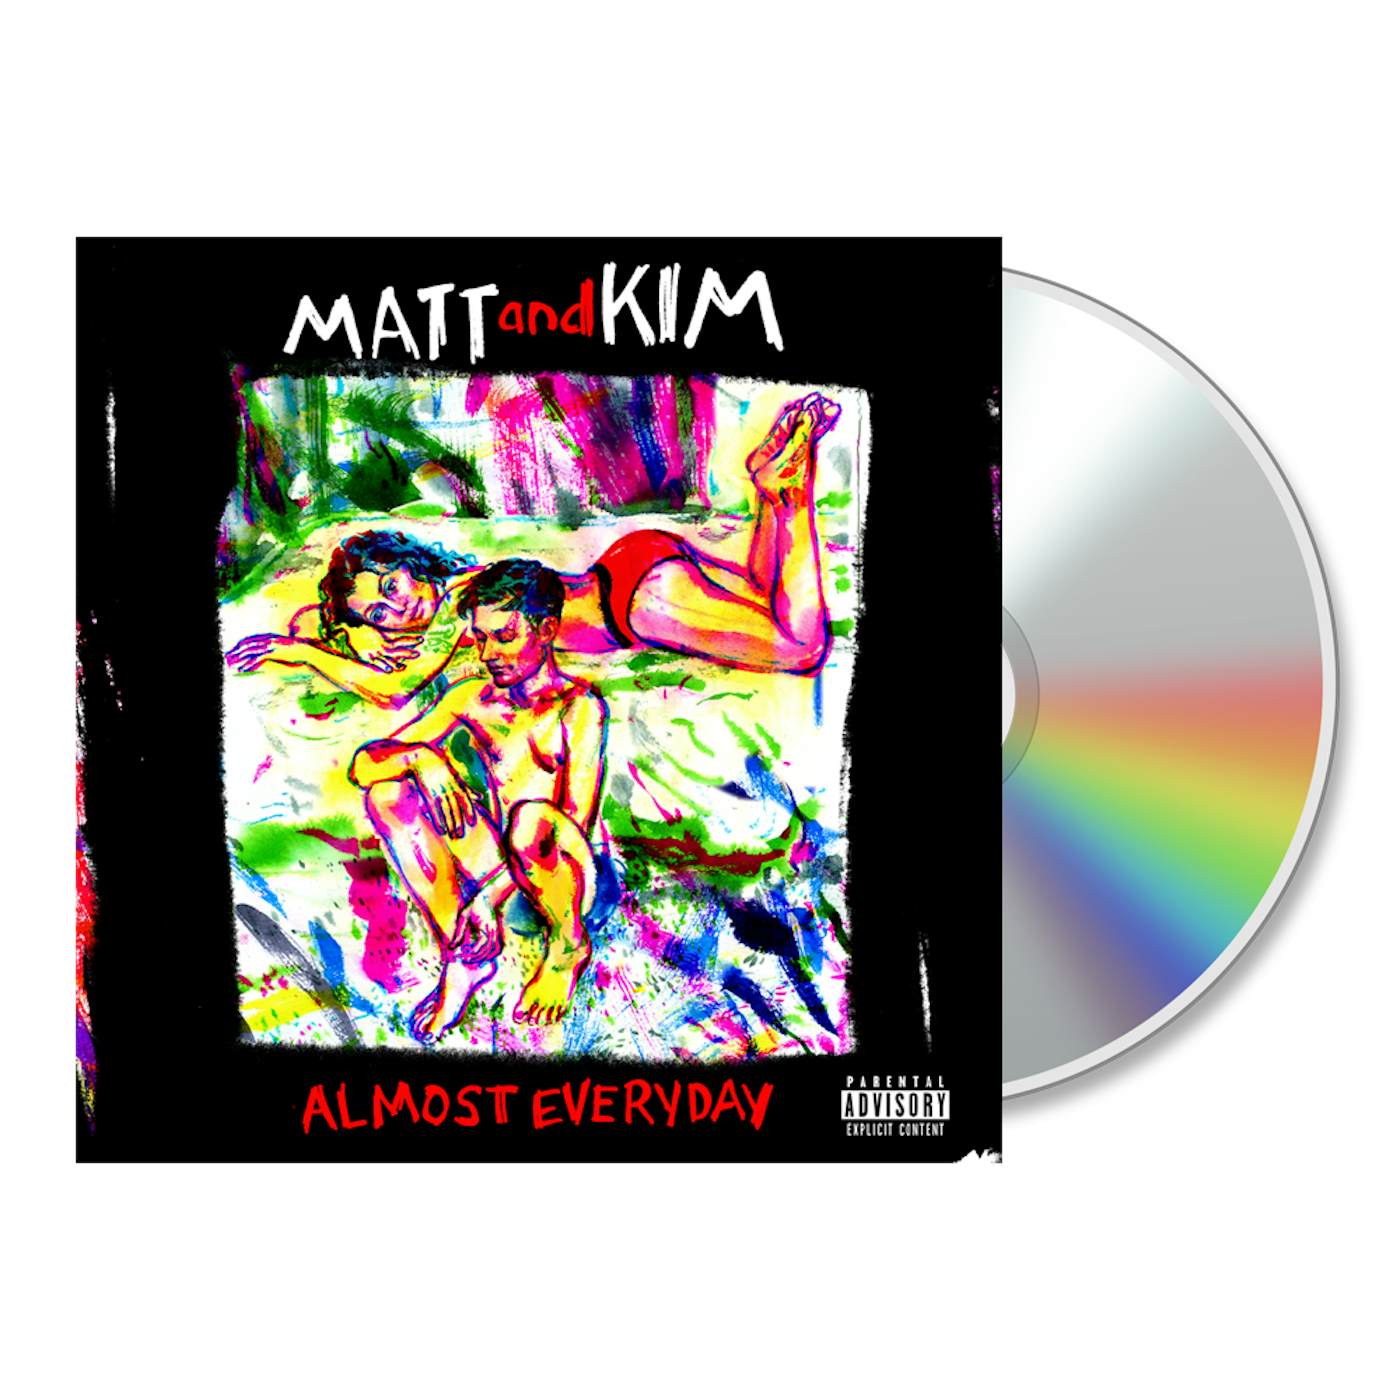 Matt and Kim "ALMOST EVERYDAY" CD